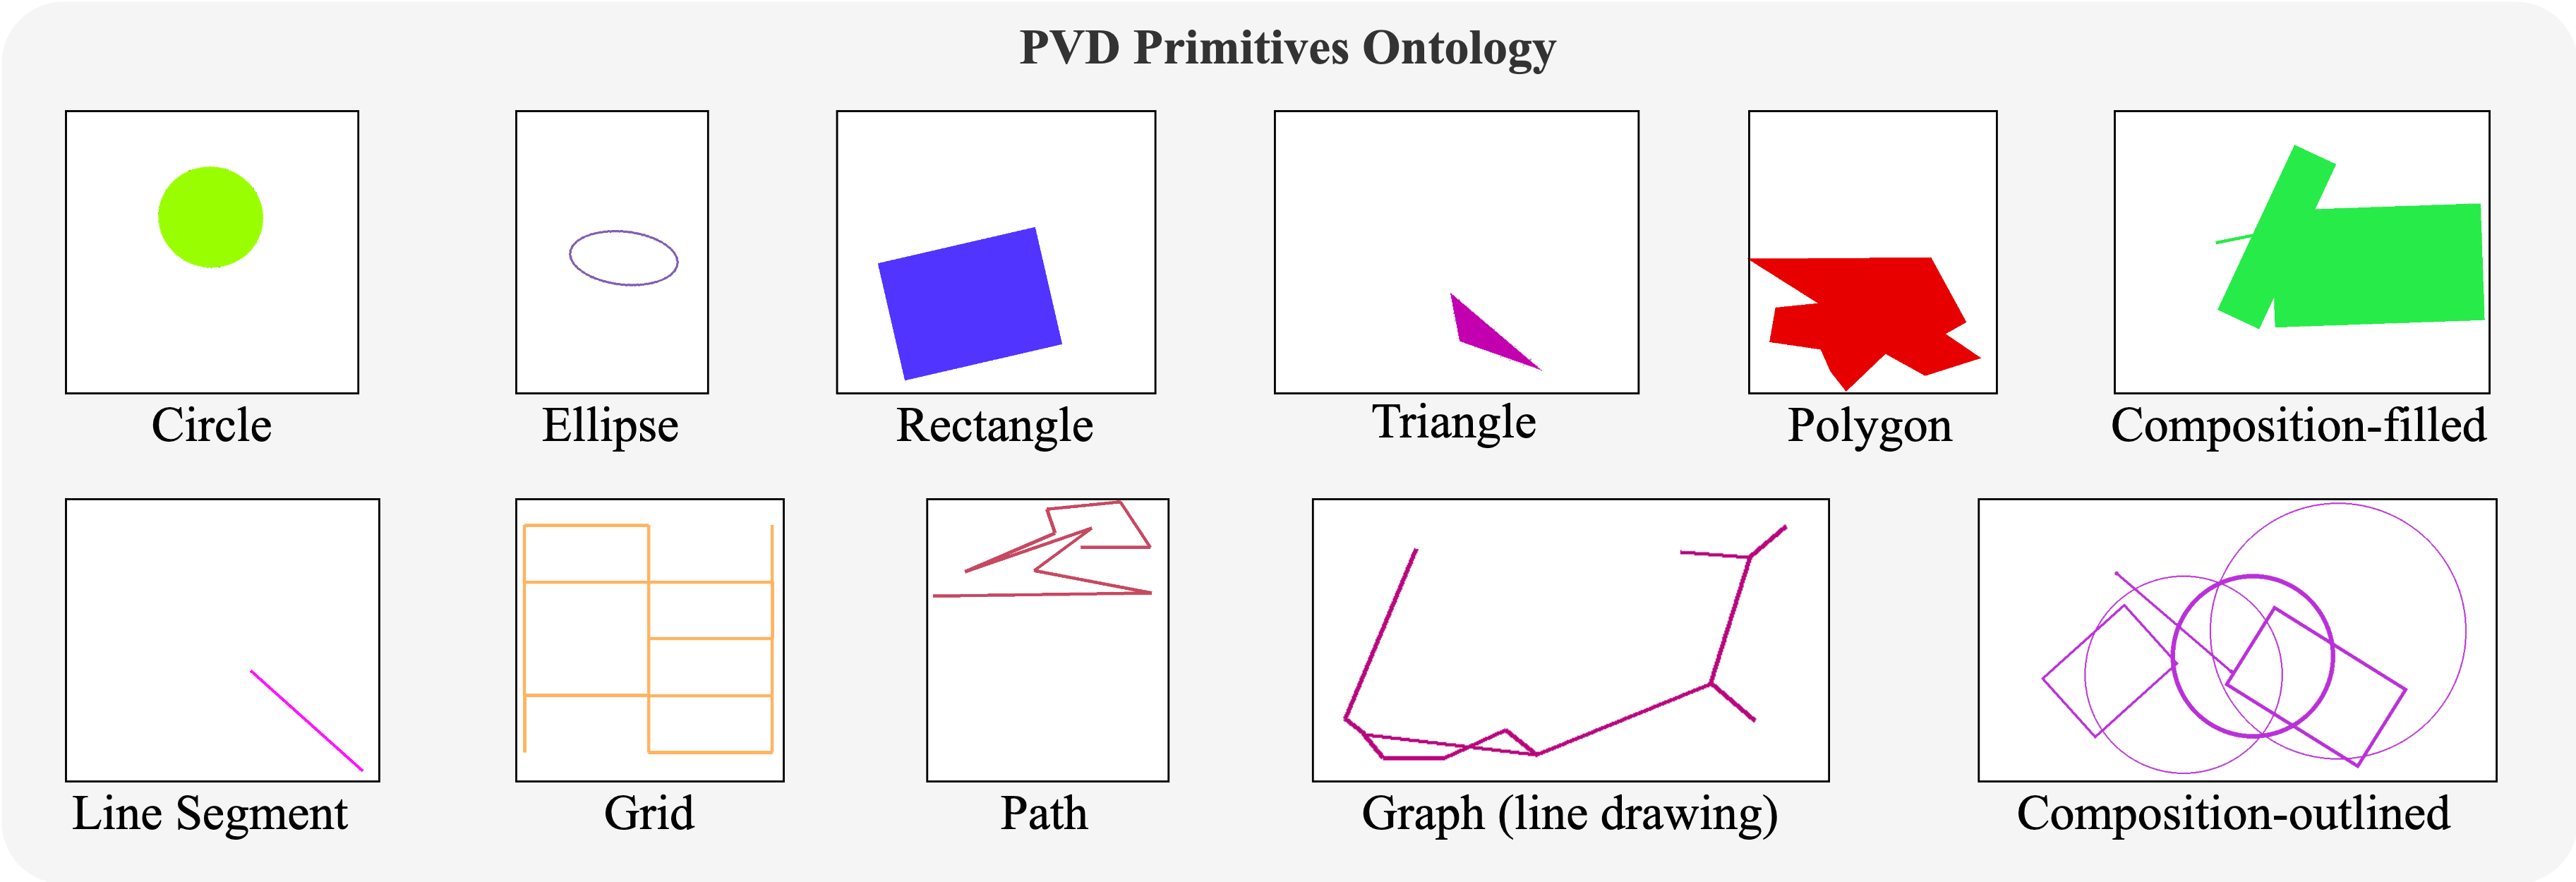 PVD ontology.